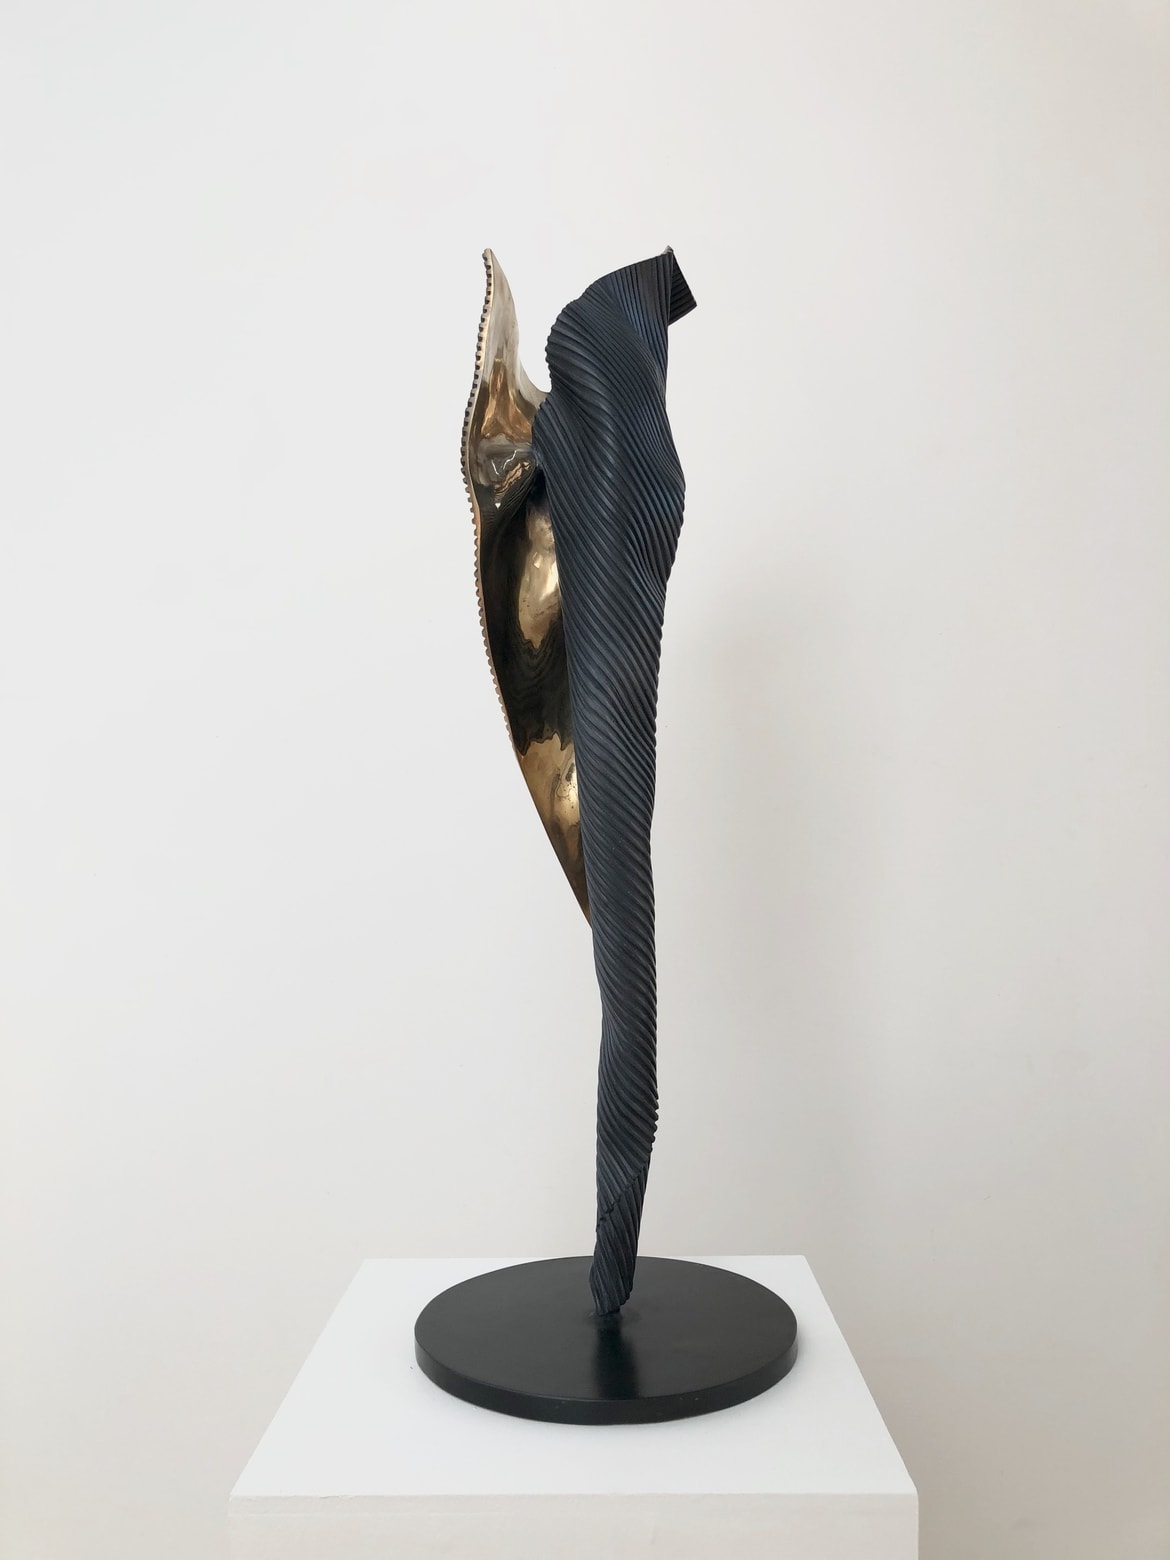 ‘I Am IV’, 2016, bronze, 102 x 30 x 25 cm, edition of 12 + 1AP